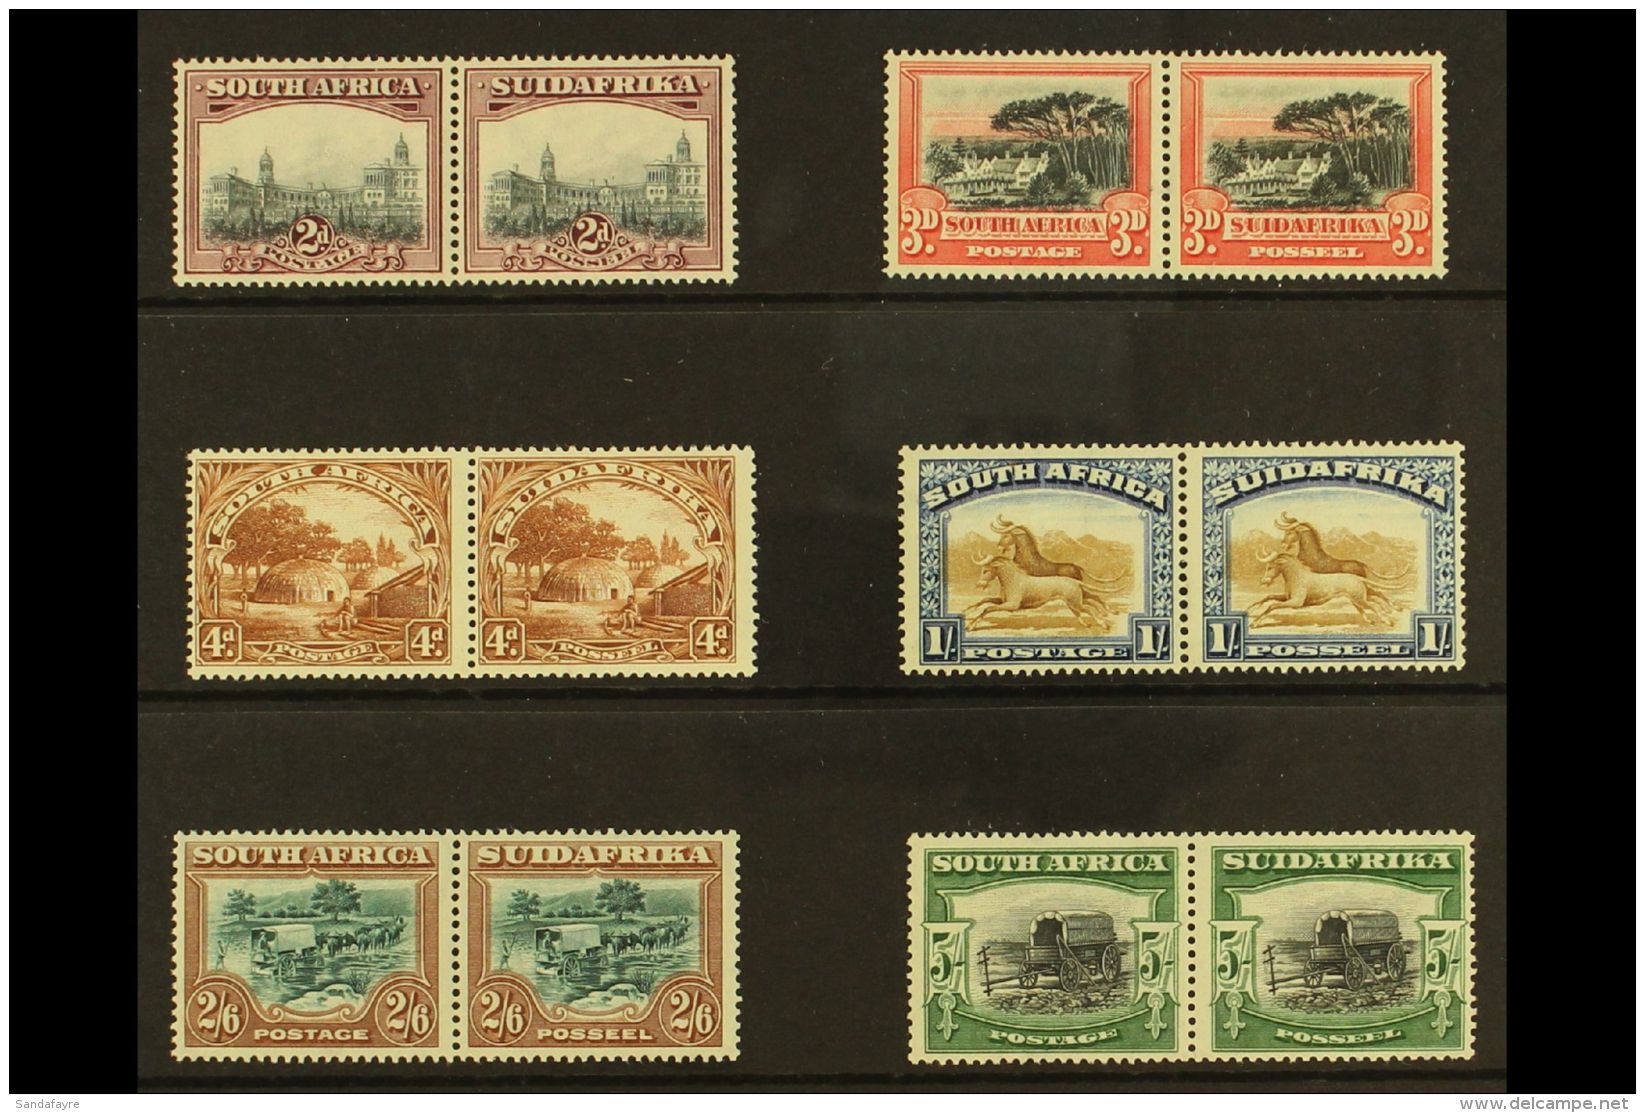 1927-30 Definitives Set To 5s, SG 34/38, Fine Fresh Mint. (6 Pairs) For More Images, Please Visit... - Zonder Classificatie